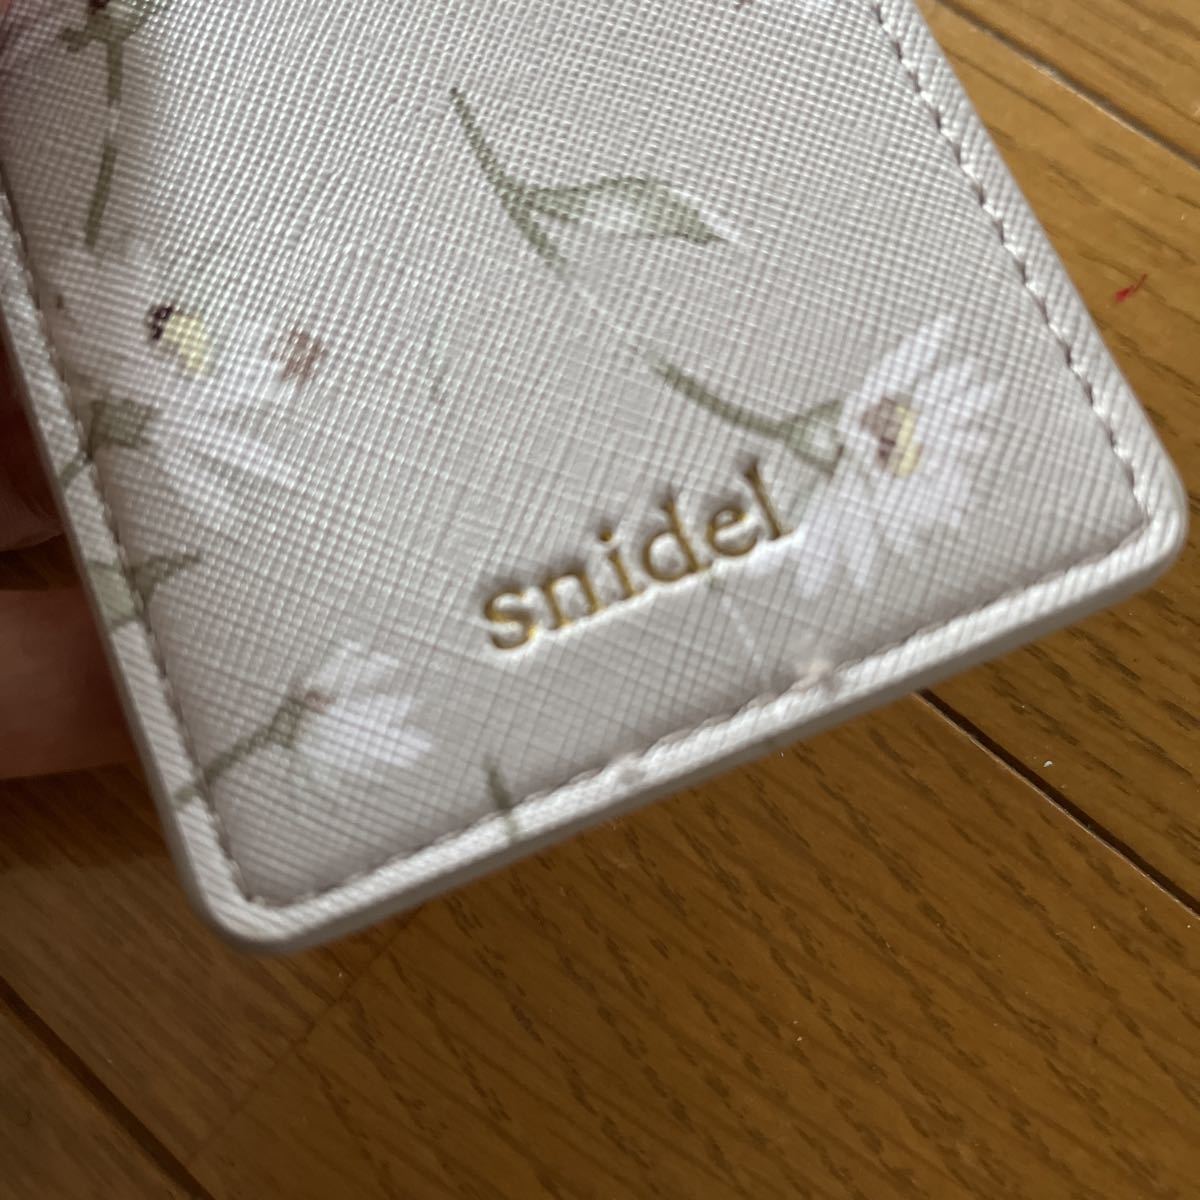  new goods!snidel Snidel card-case card inserting lovely . flower floral print .. pink!